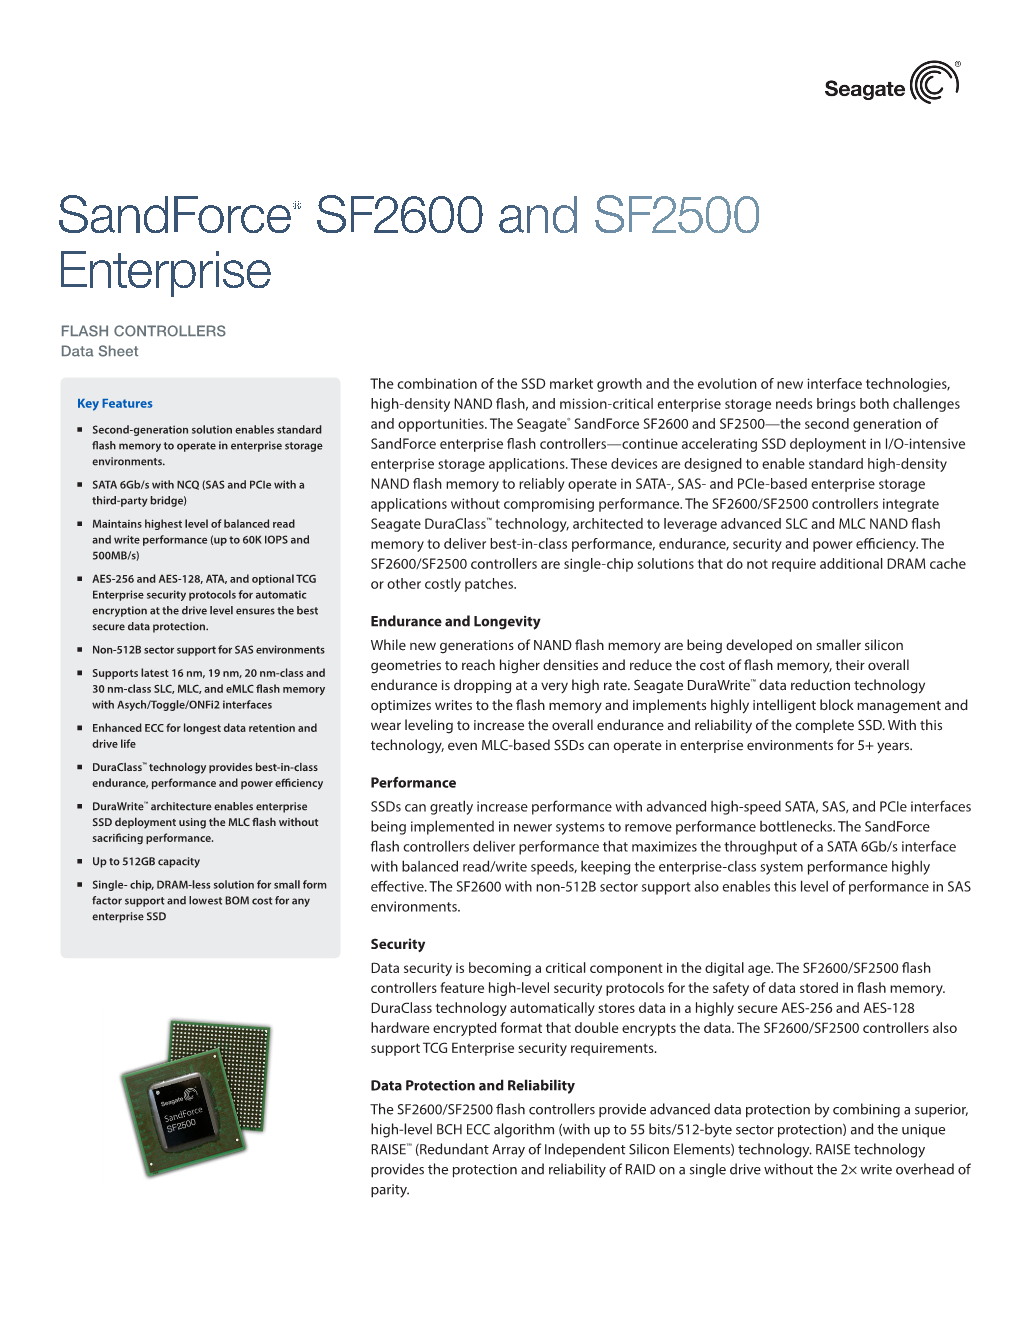 Sandforce® SF2600 and SF2500 Enterprise